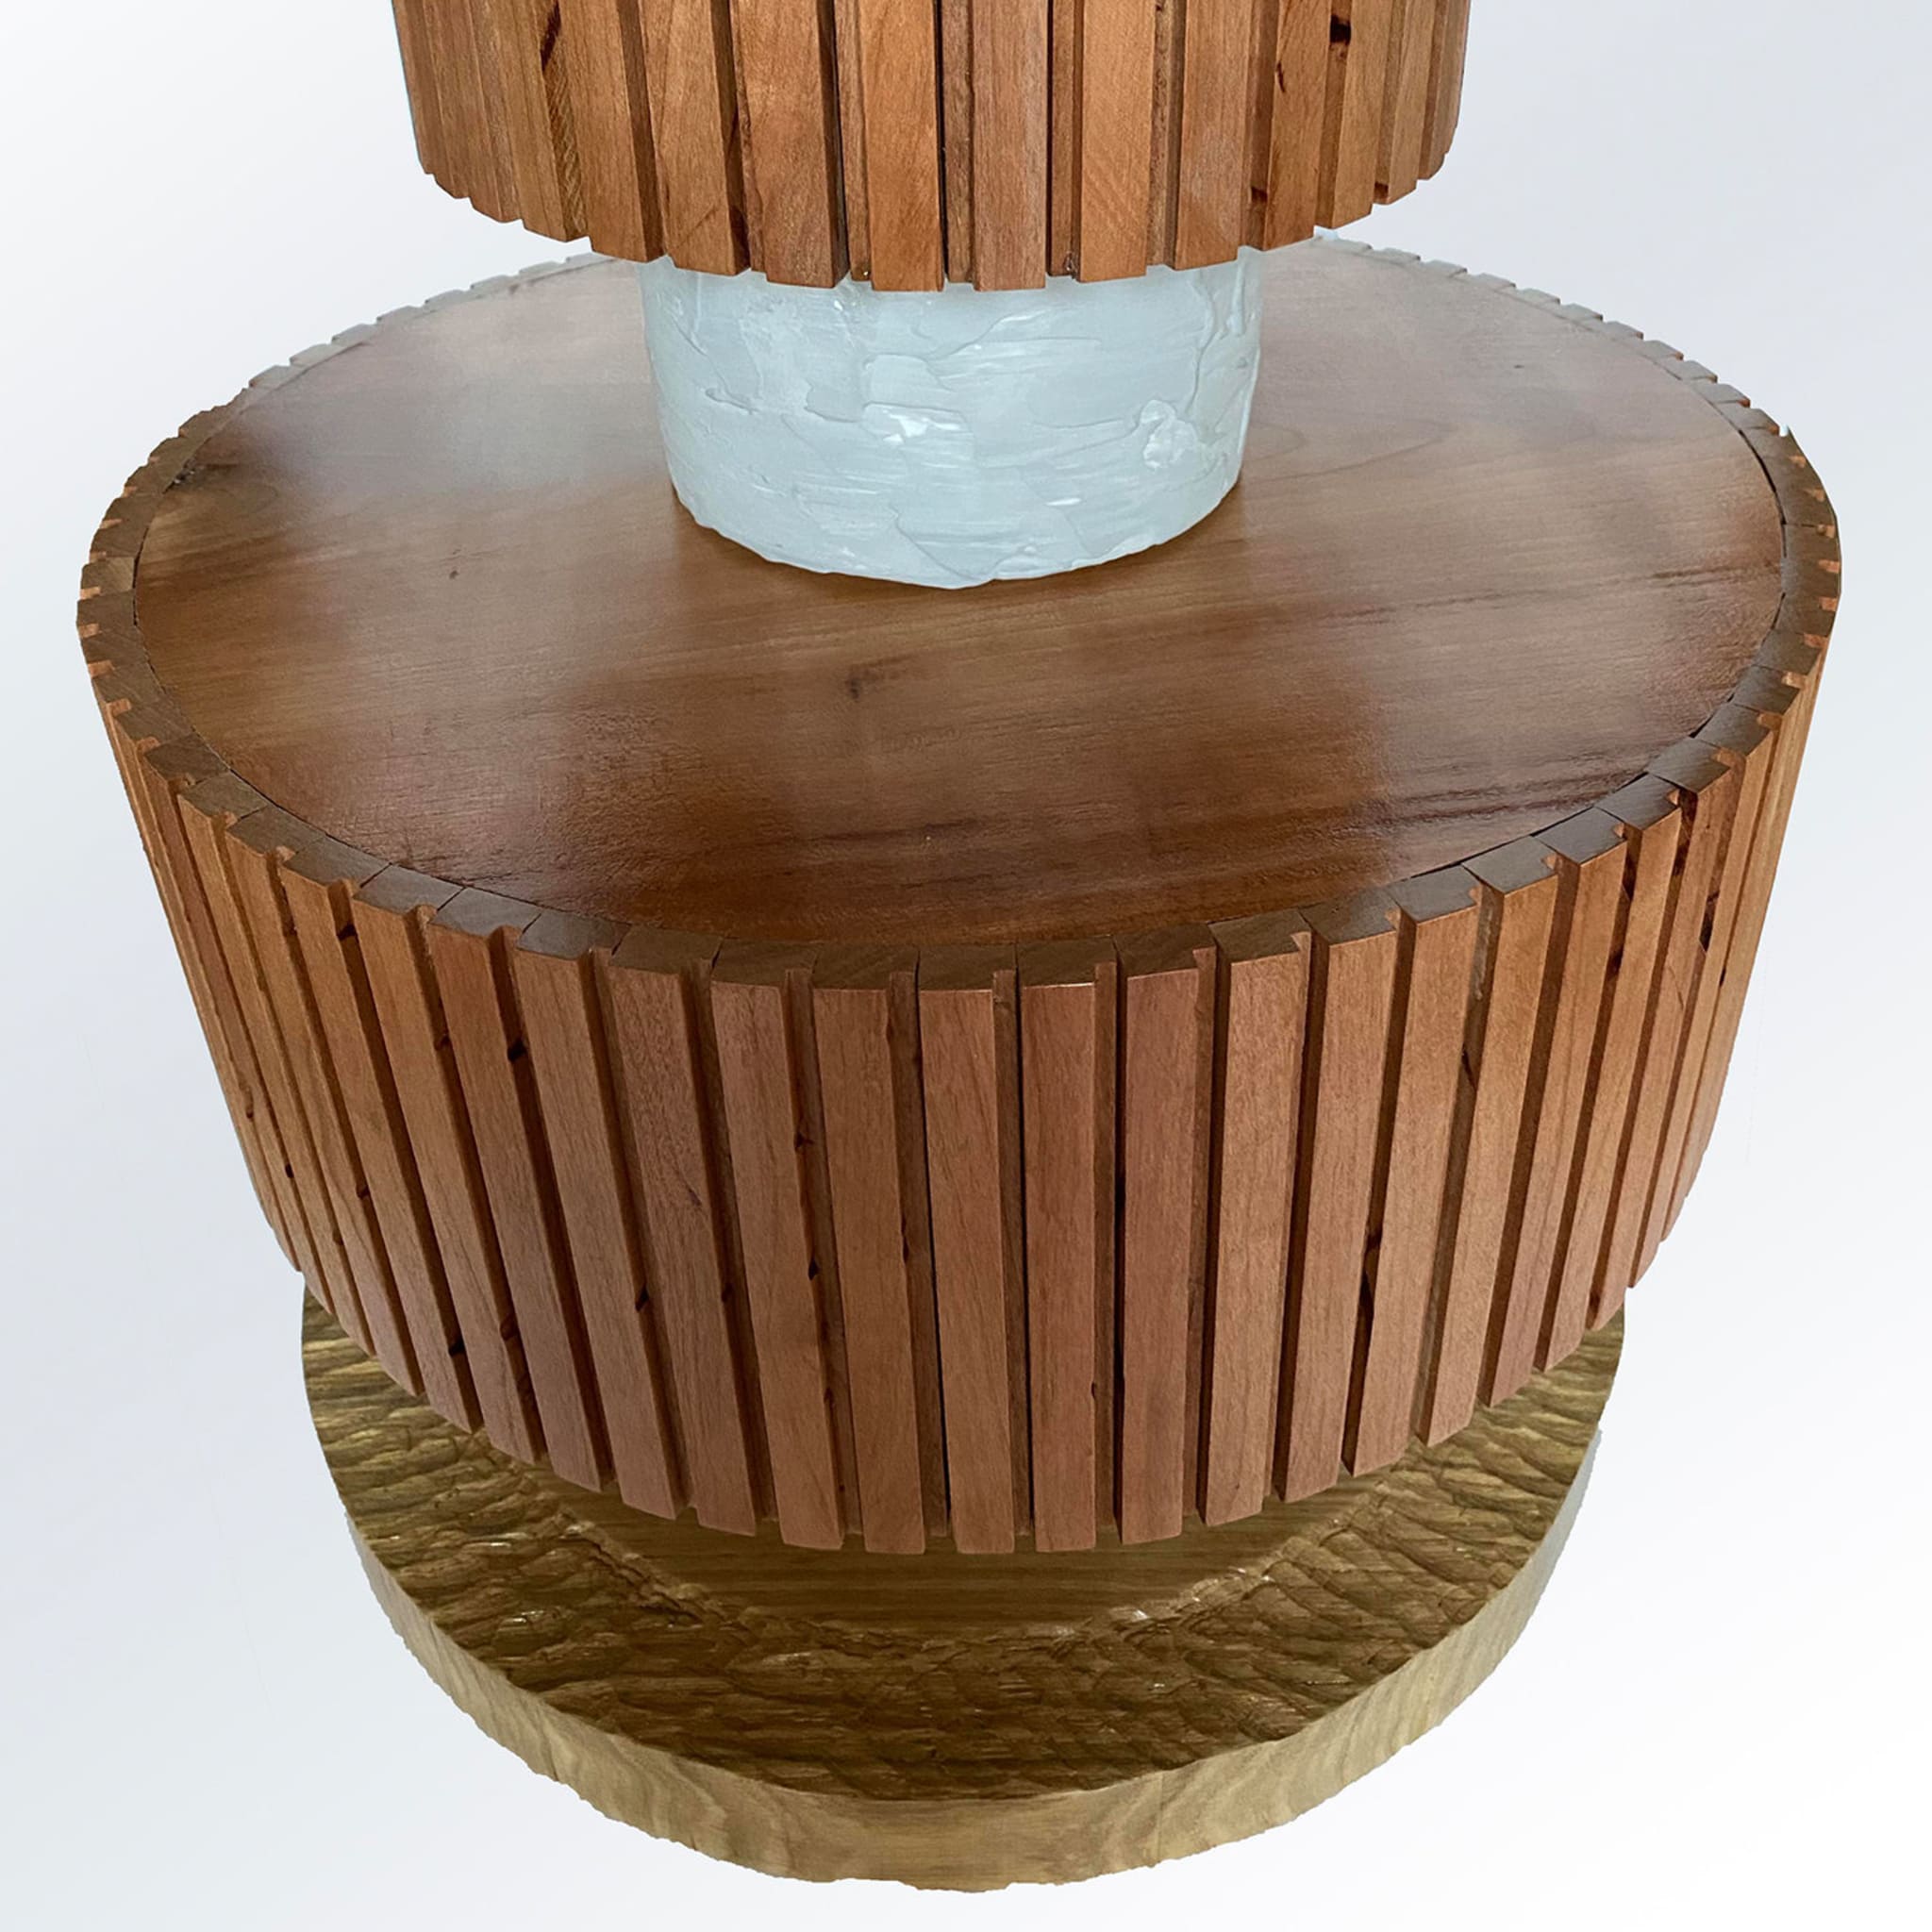 Totem Table Lamp by Mascia Meccani #2 - Alternative view 4